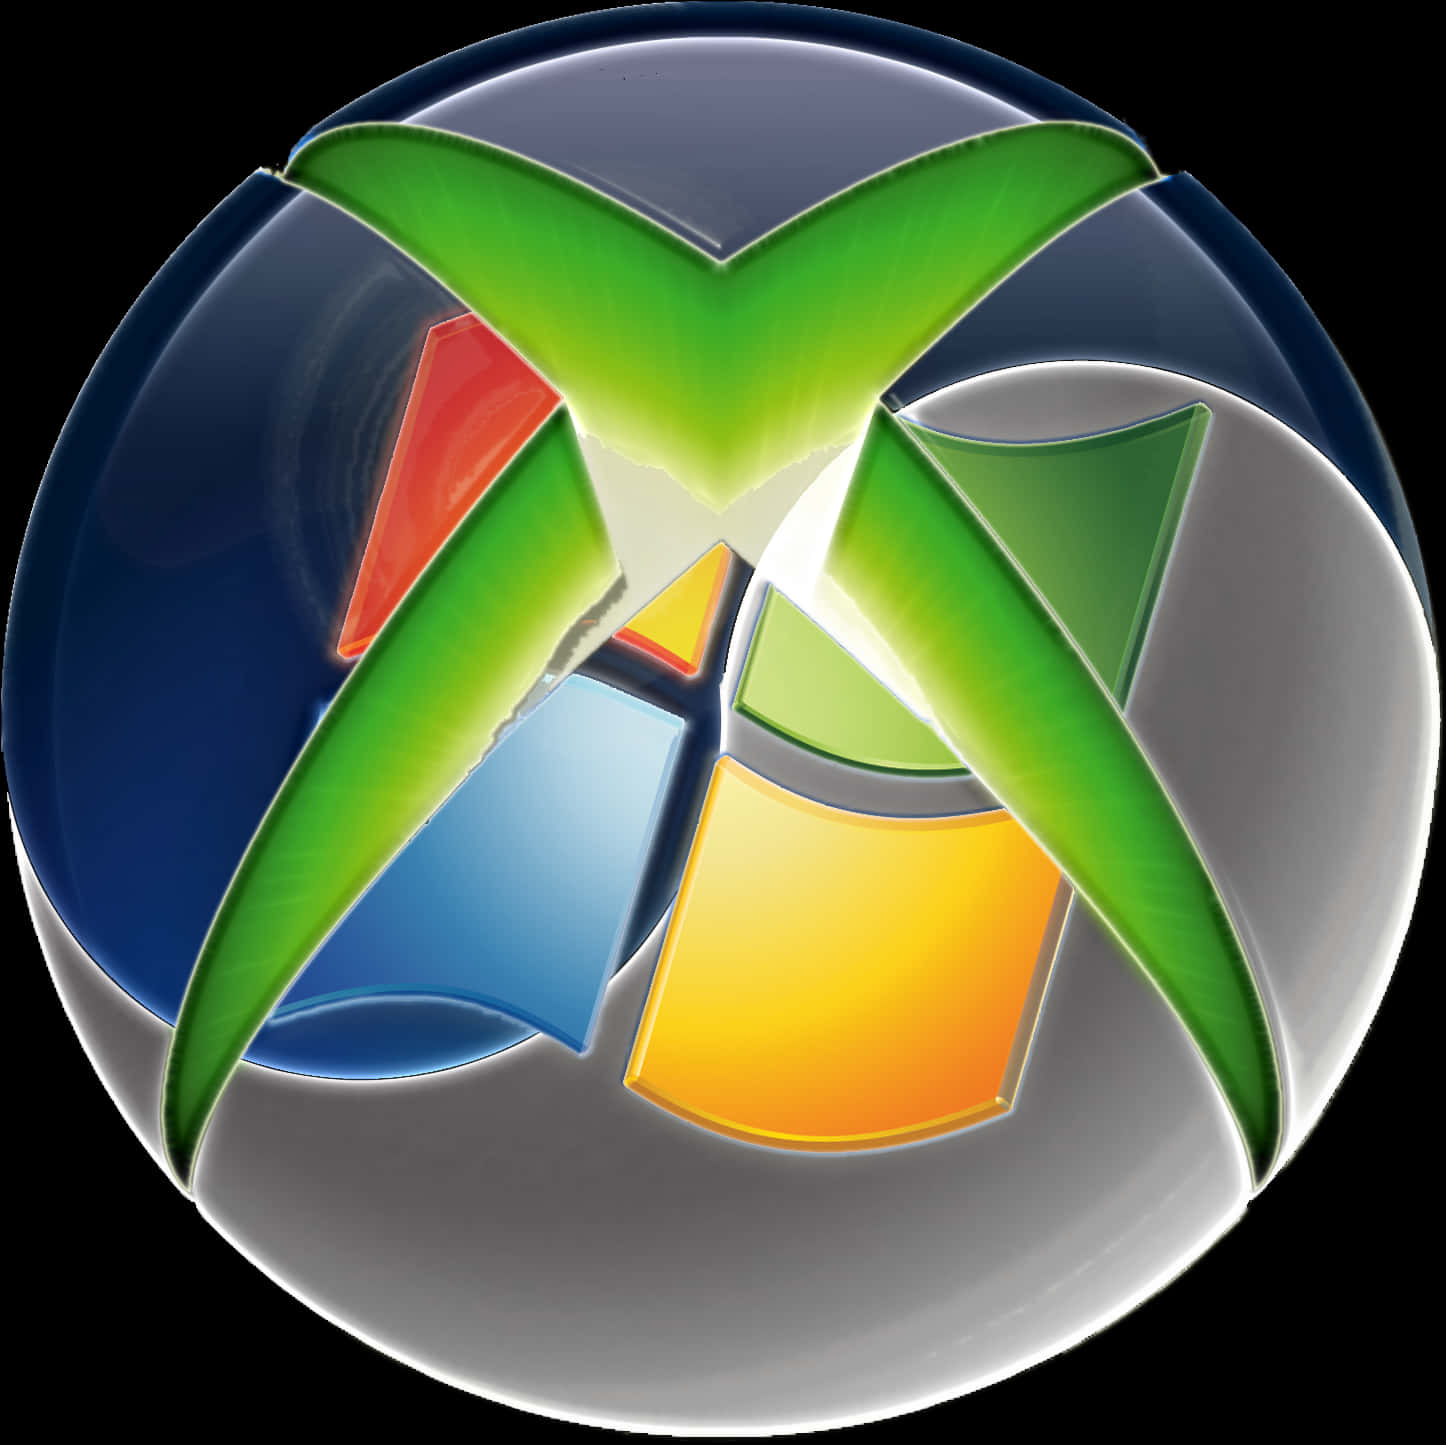 Xbox Logo Glossy Button